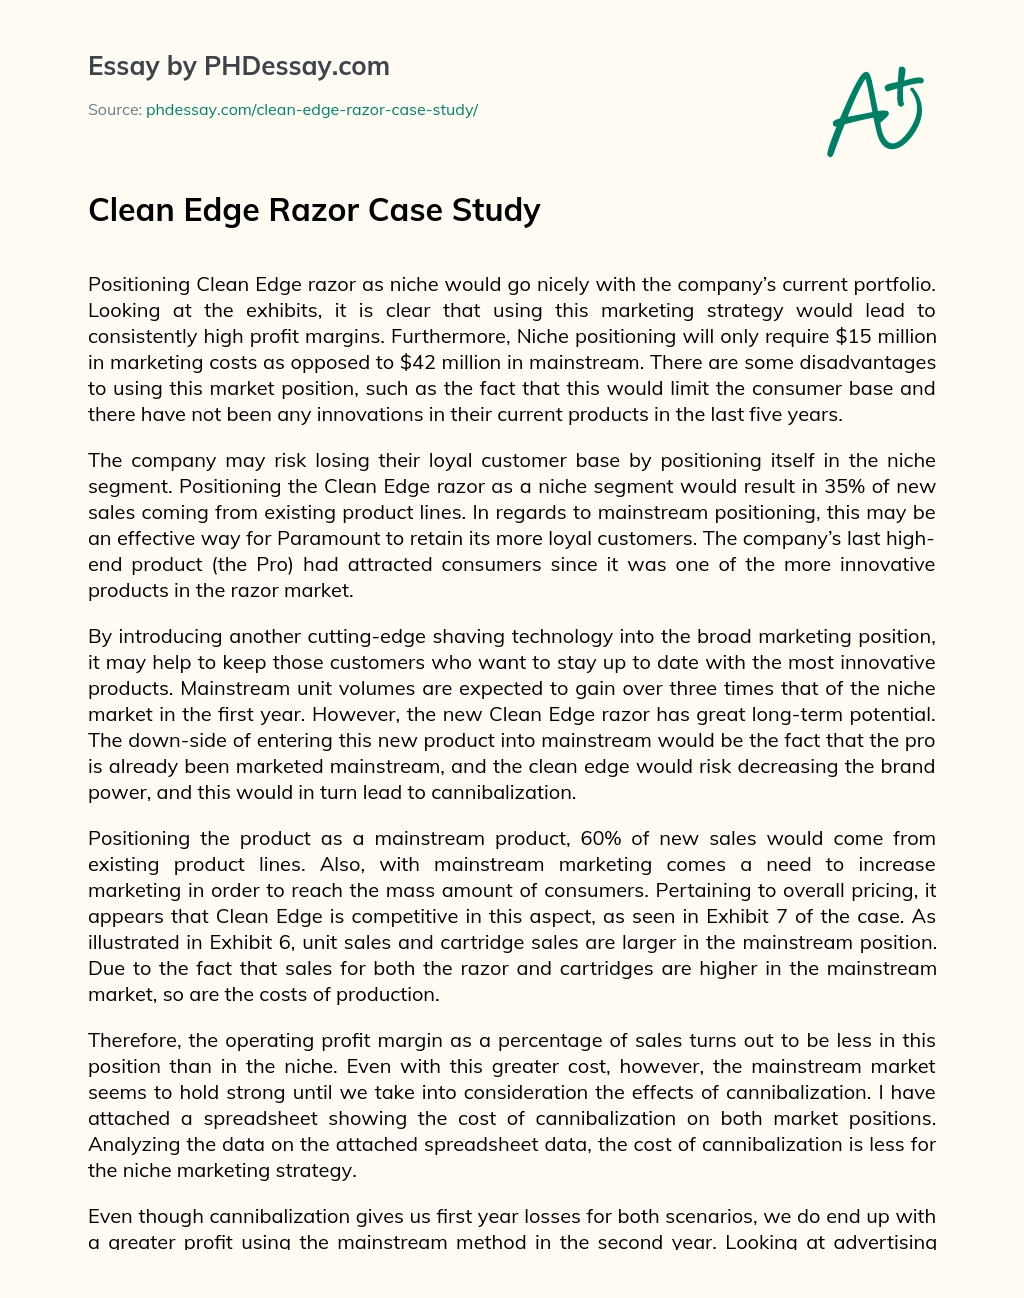 Clean Edge Razor Case Study essay